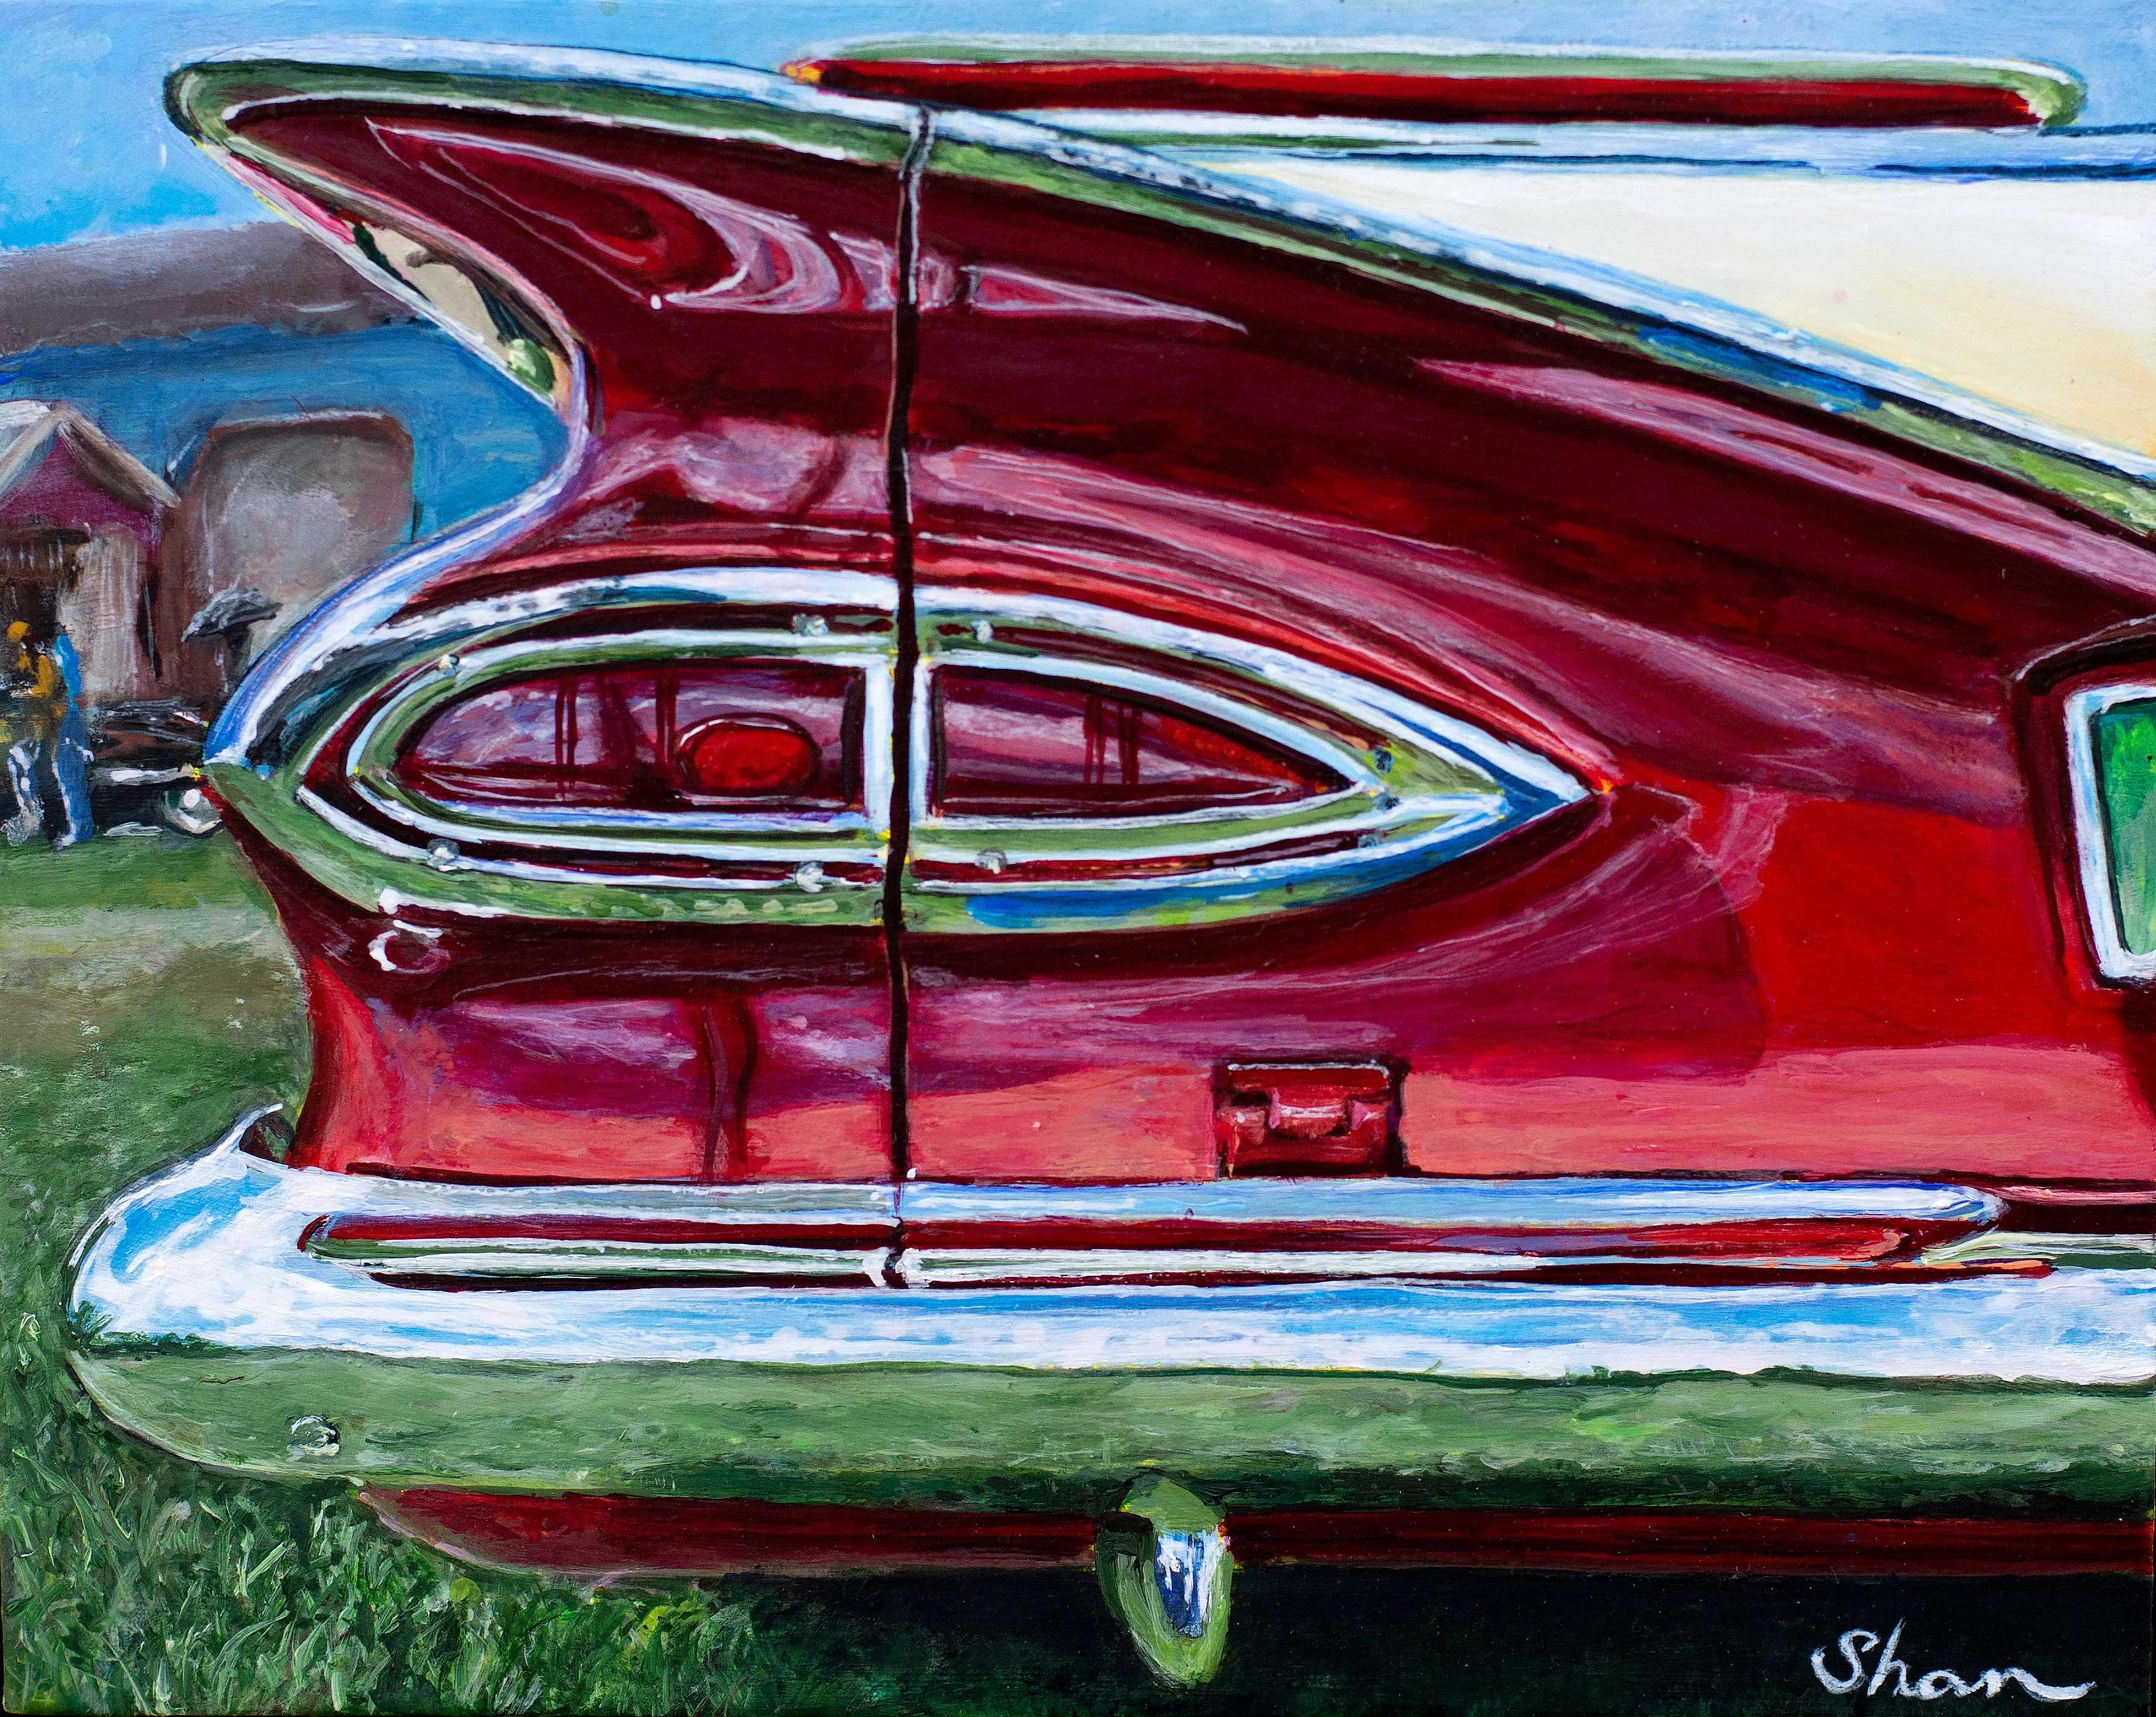 Shan Fannin Figurative Painting - "1959 Chevrolet El Camino, " Acrylic painting